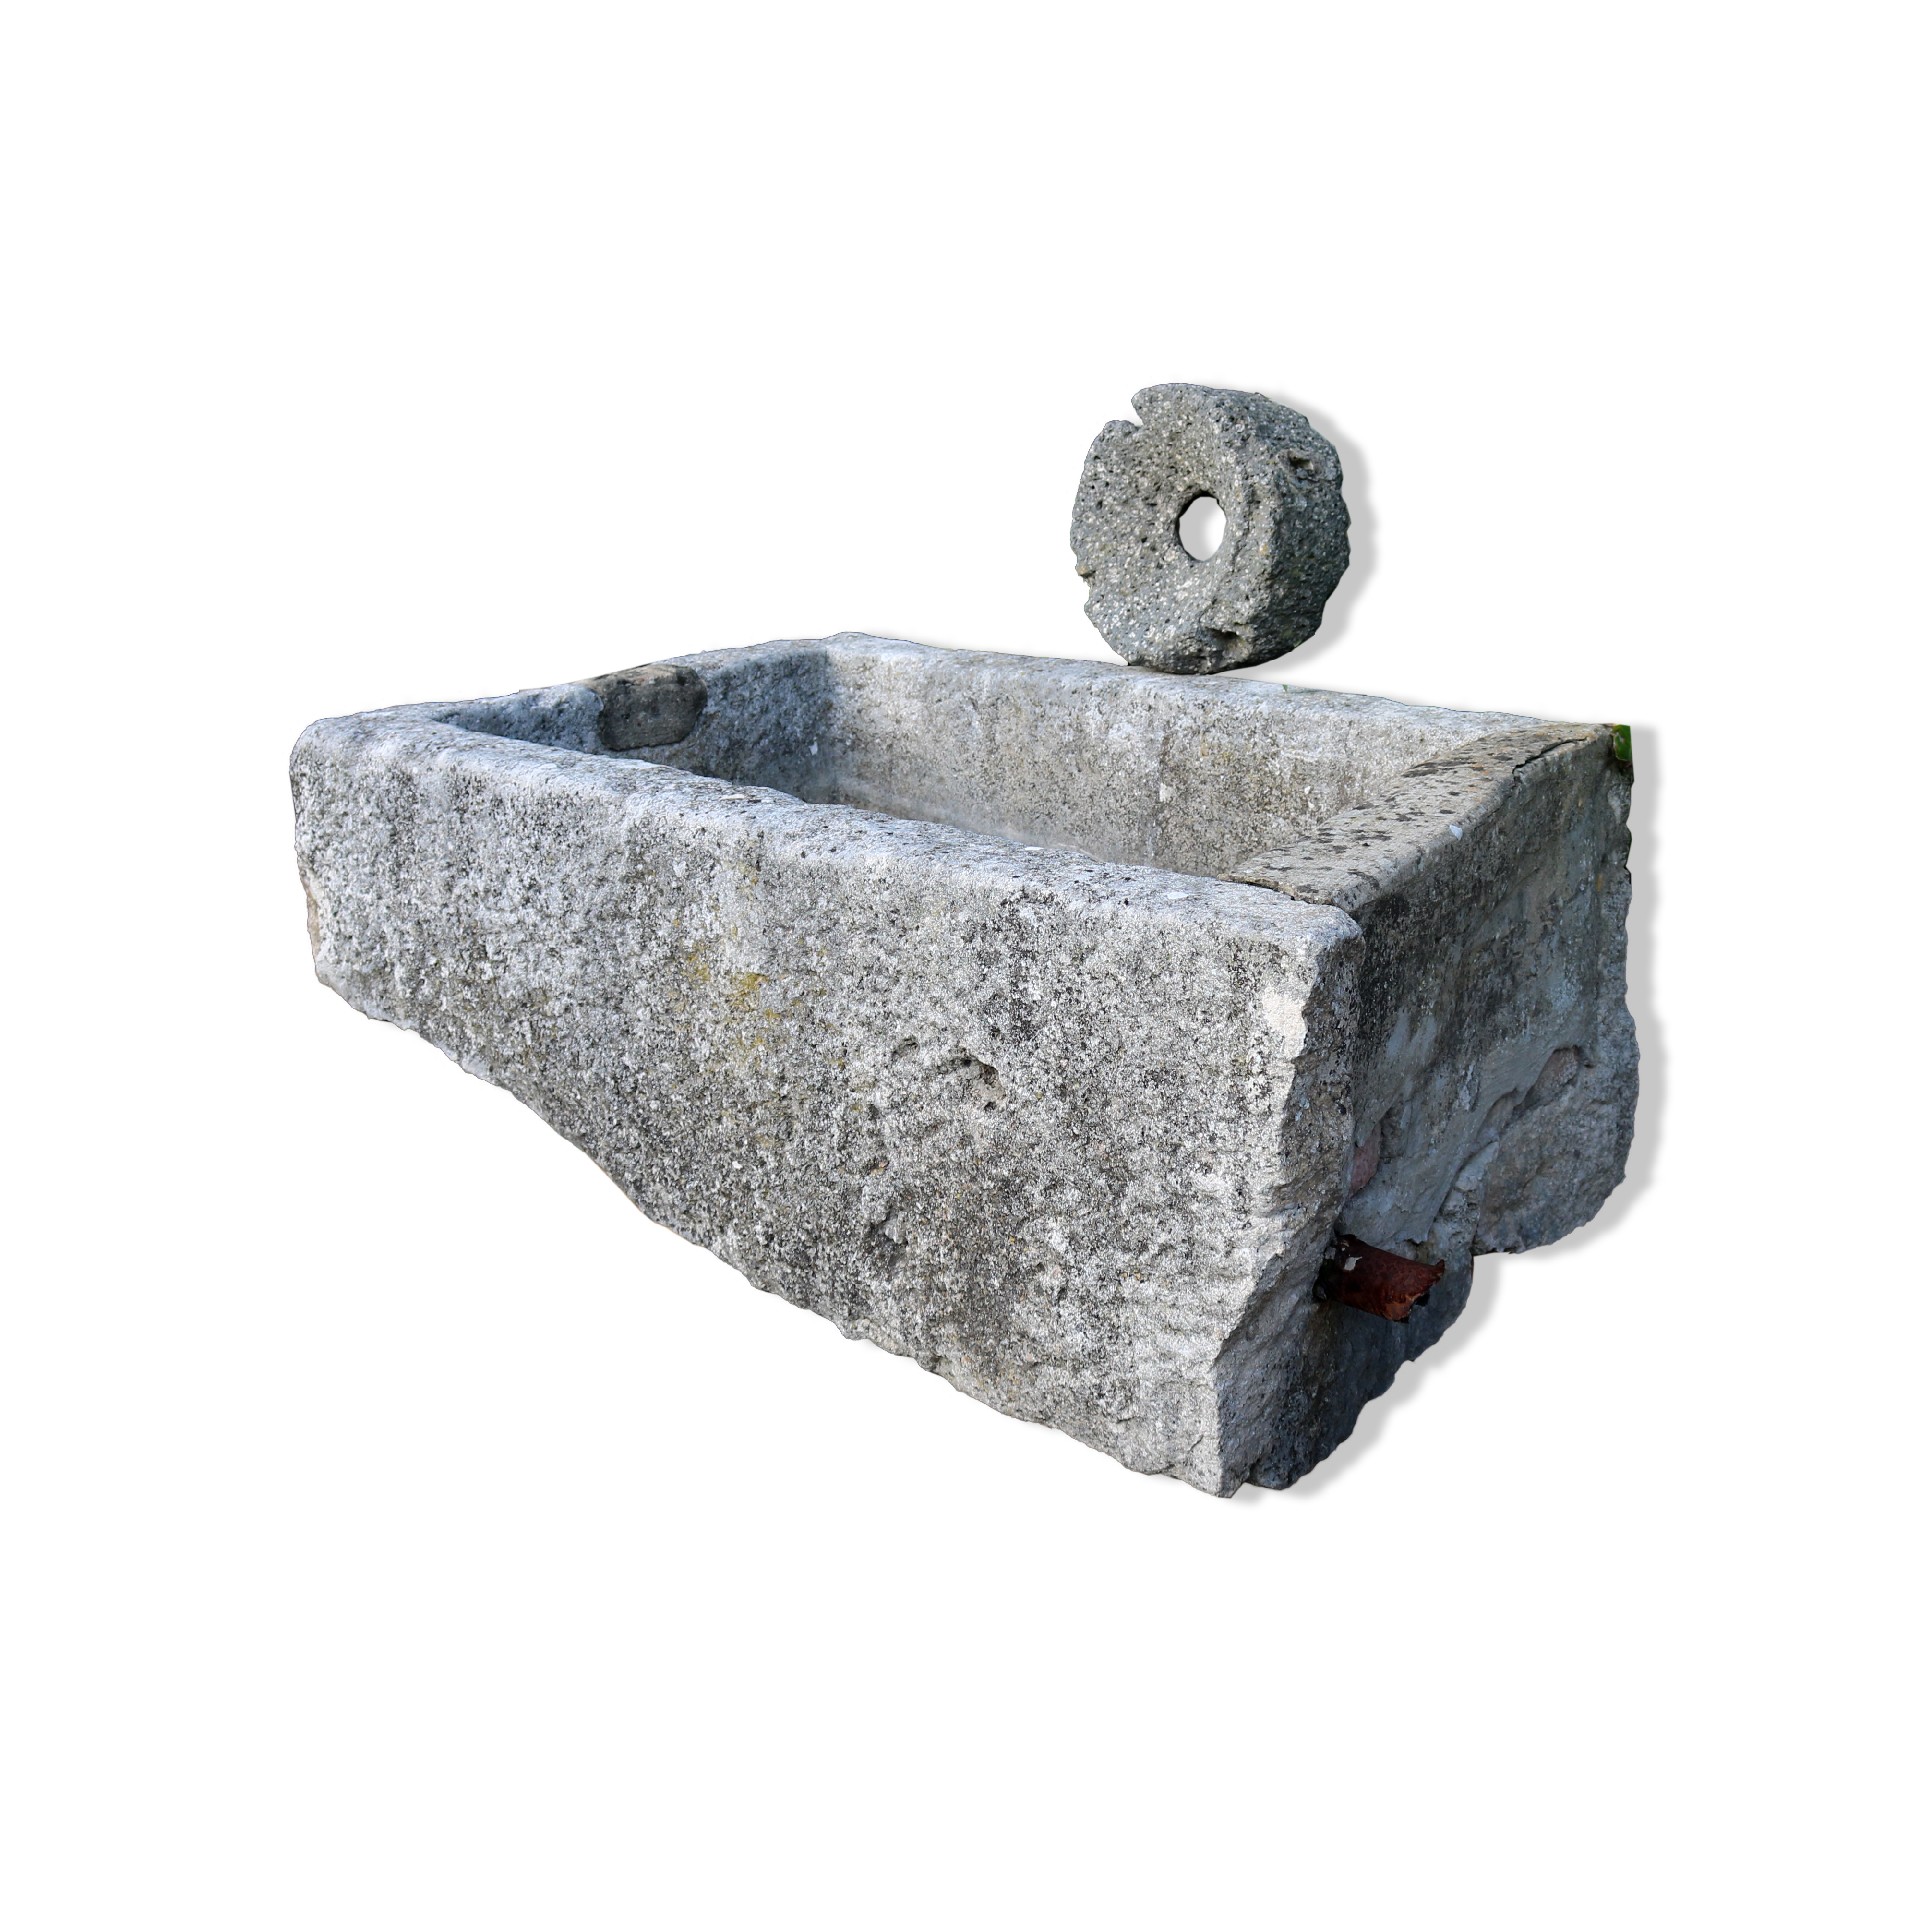 Antica fontana in pietra. - 1